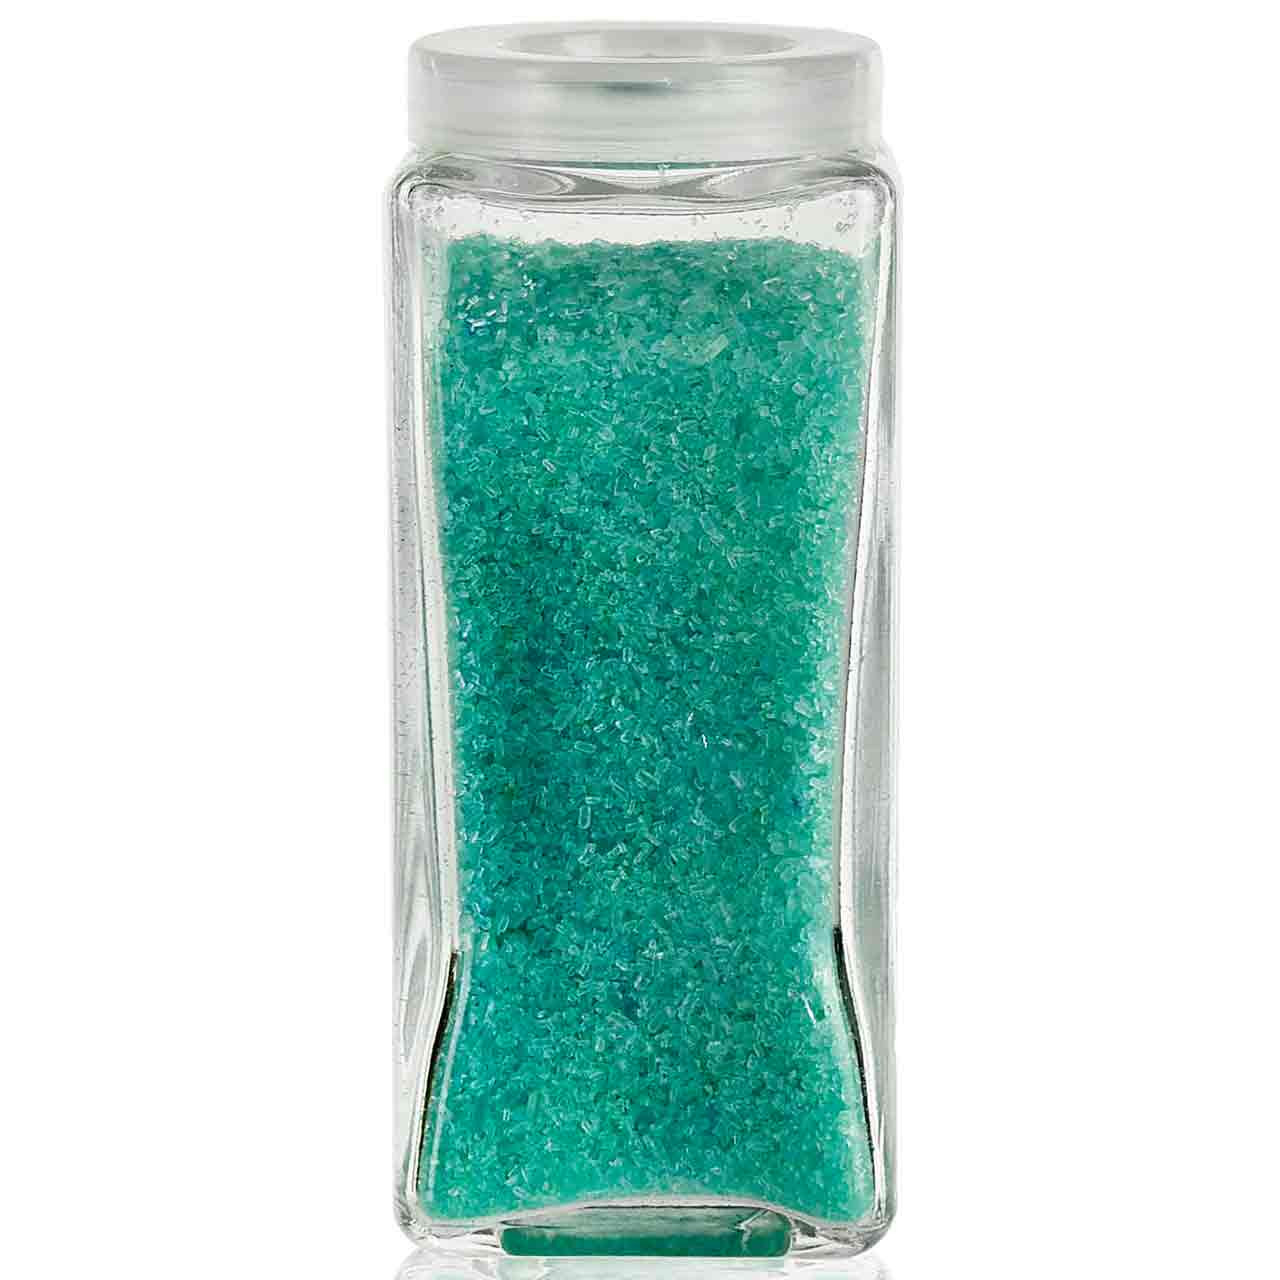 The Container Store 3 oz. Glass Spice Jar Matte Black Pkg/12, 1-3/4 diam. x 3-3/4 H